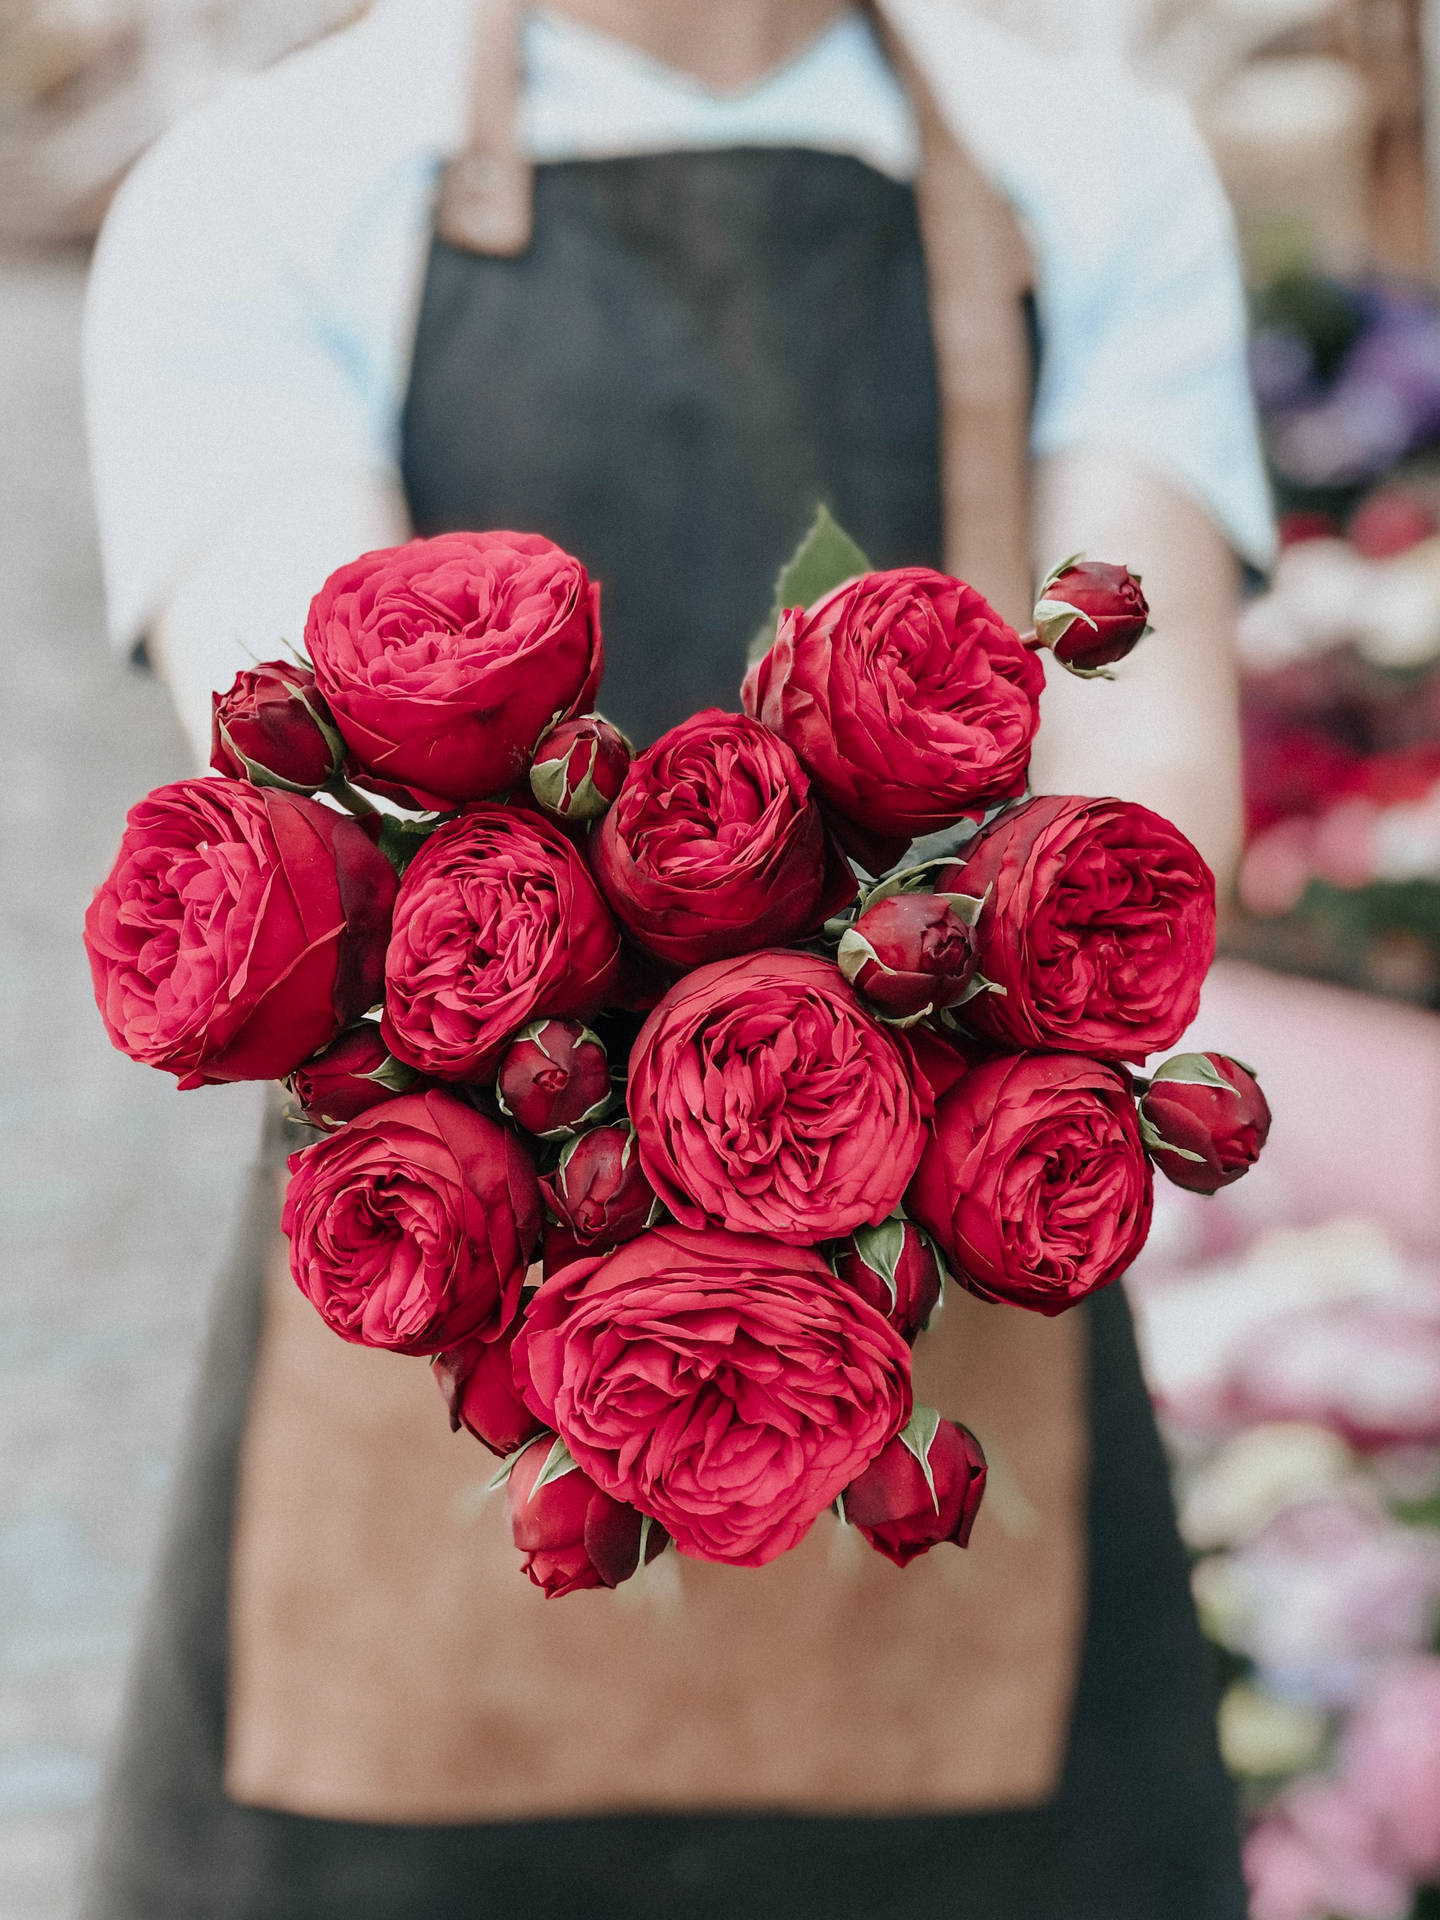 Enchanting Red Garden Roses Bouquet Wallpaper